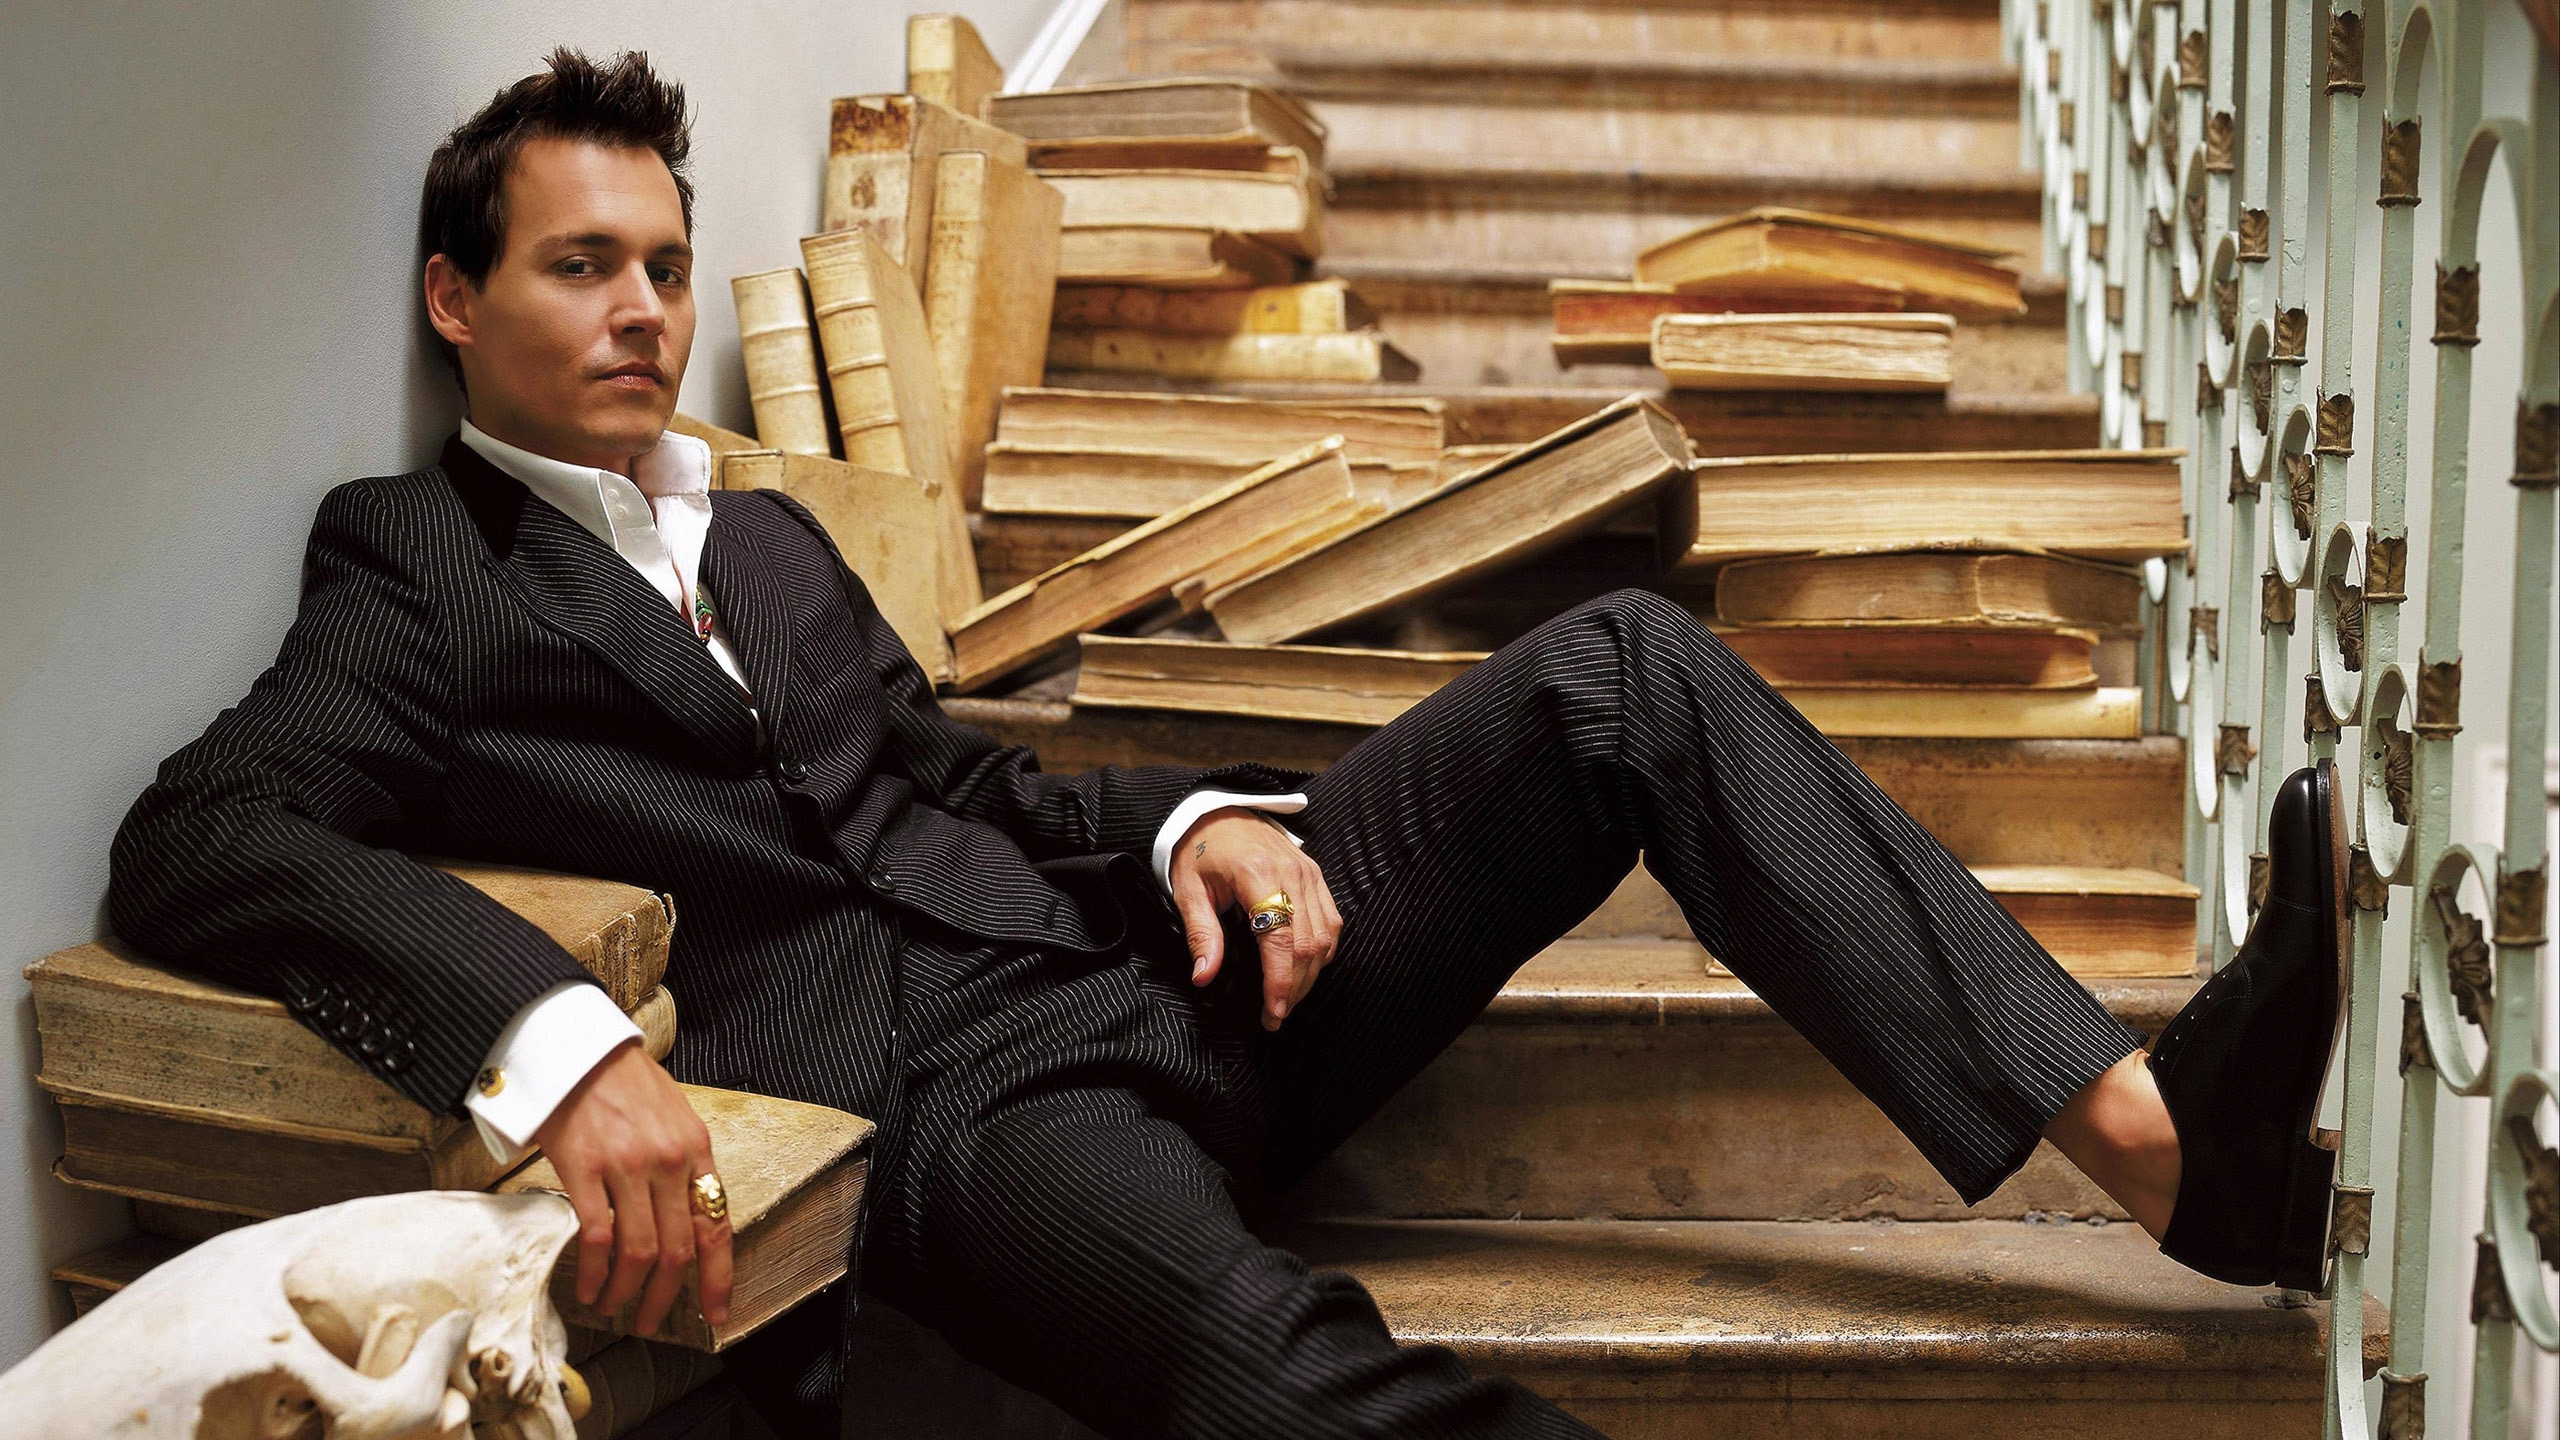 Johnny Depp Elegant for 2560x1440 HDTV resolution